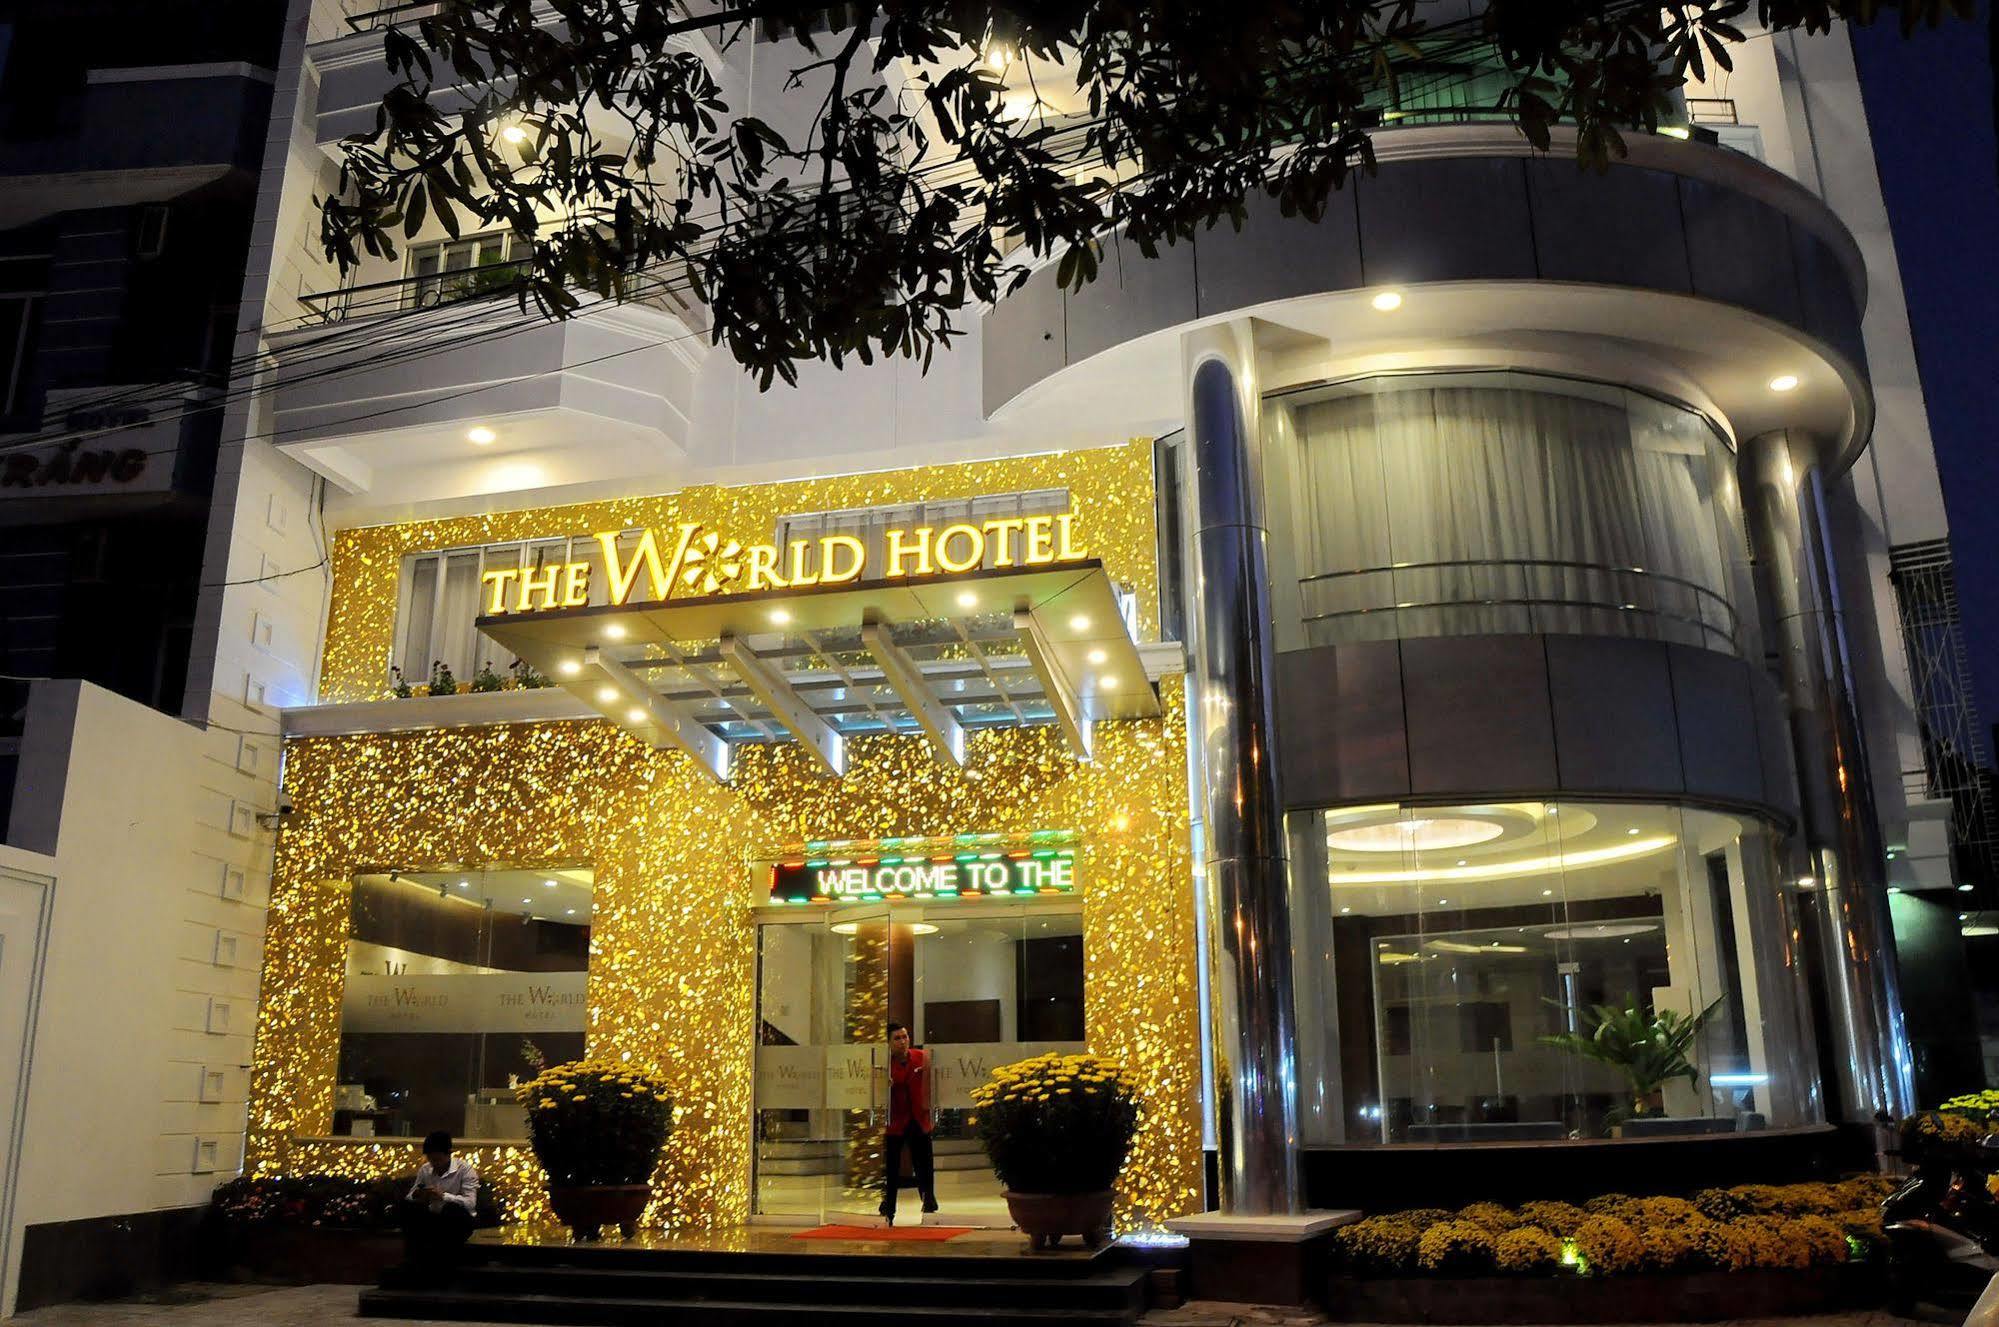 Camellia Nhatrang Hotel Nha Trang Esterno foto